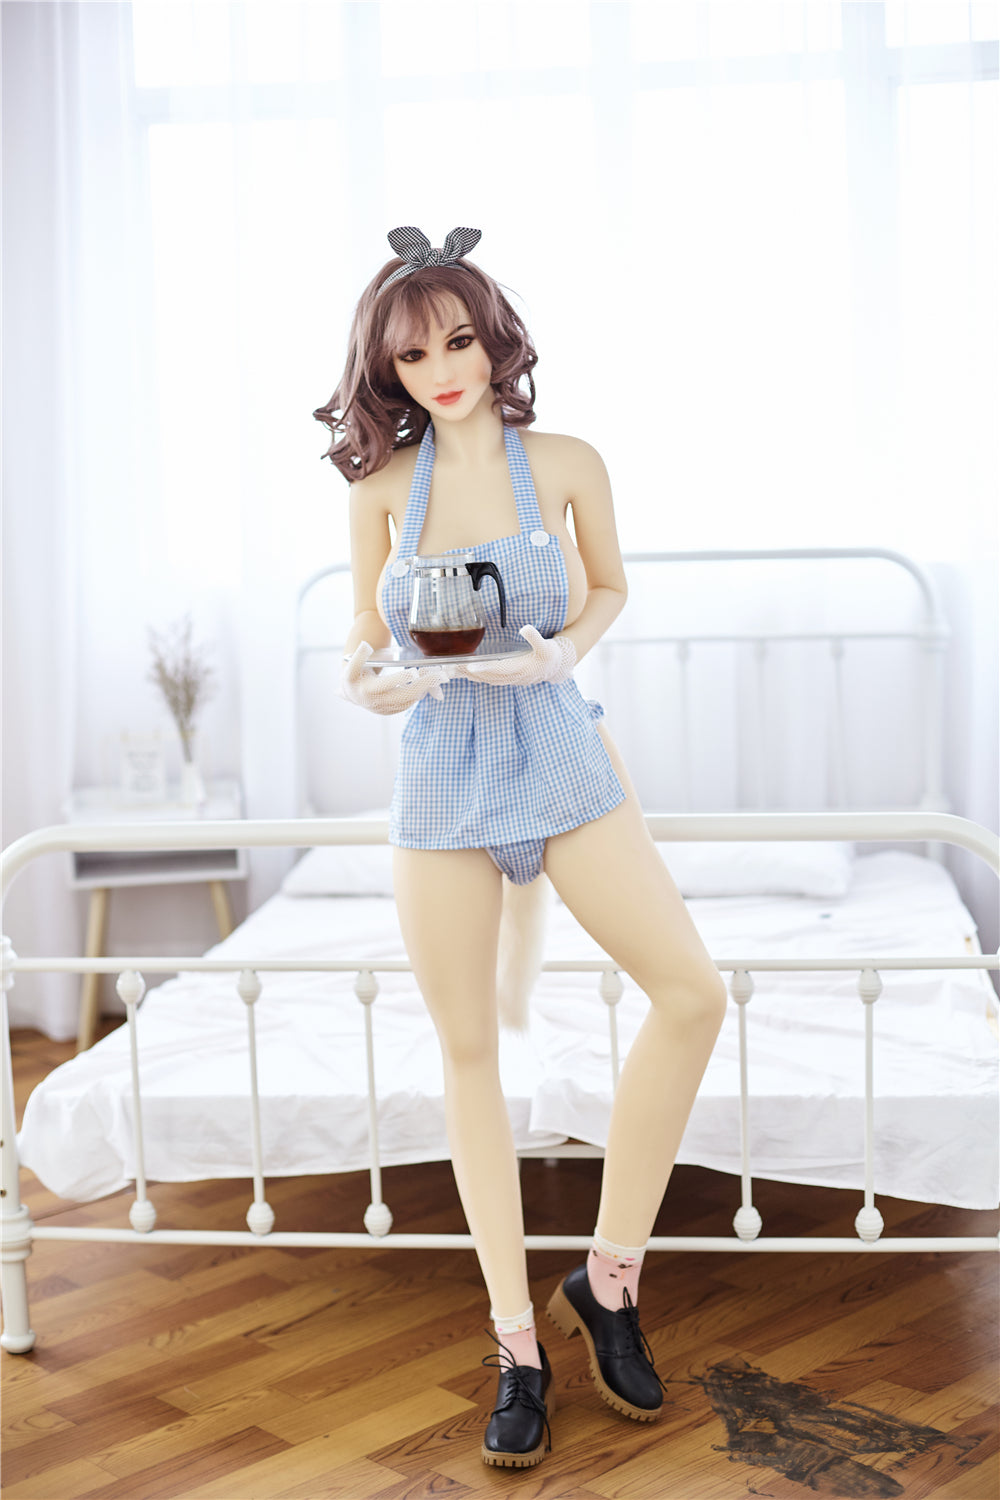 Irontech Doll 157 cm D TPE - Miriam | Buy Sex Dolls at DOLLS ACTUALLY